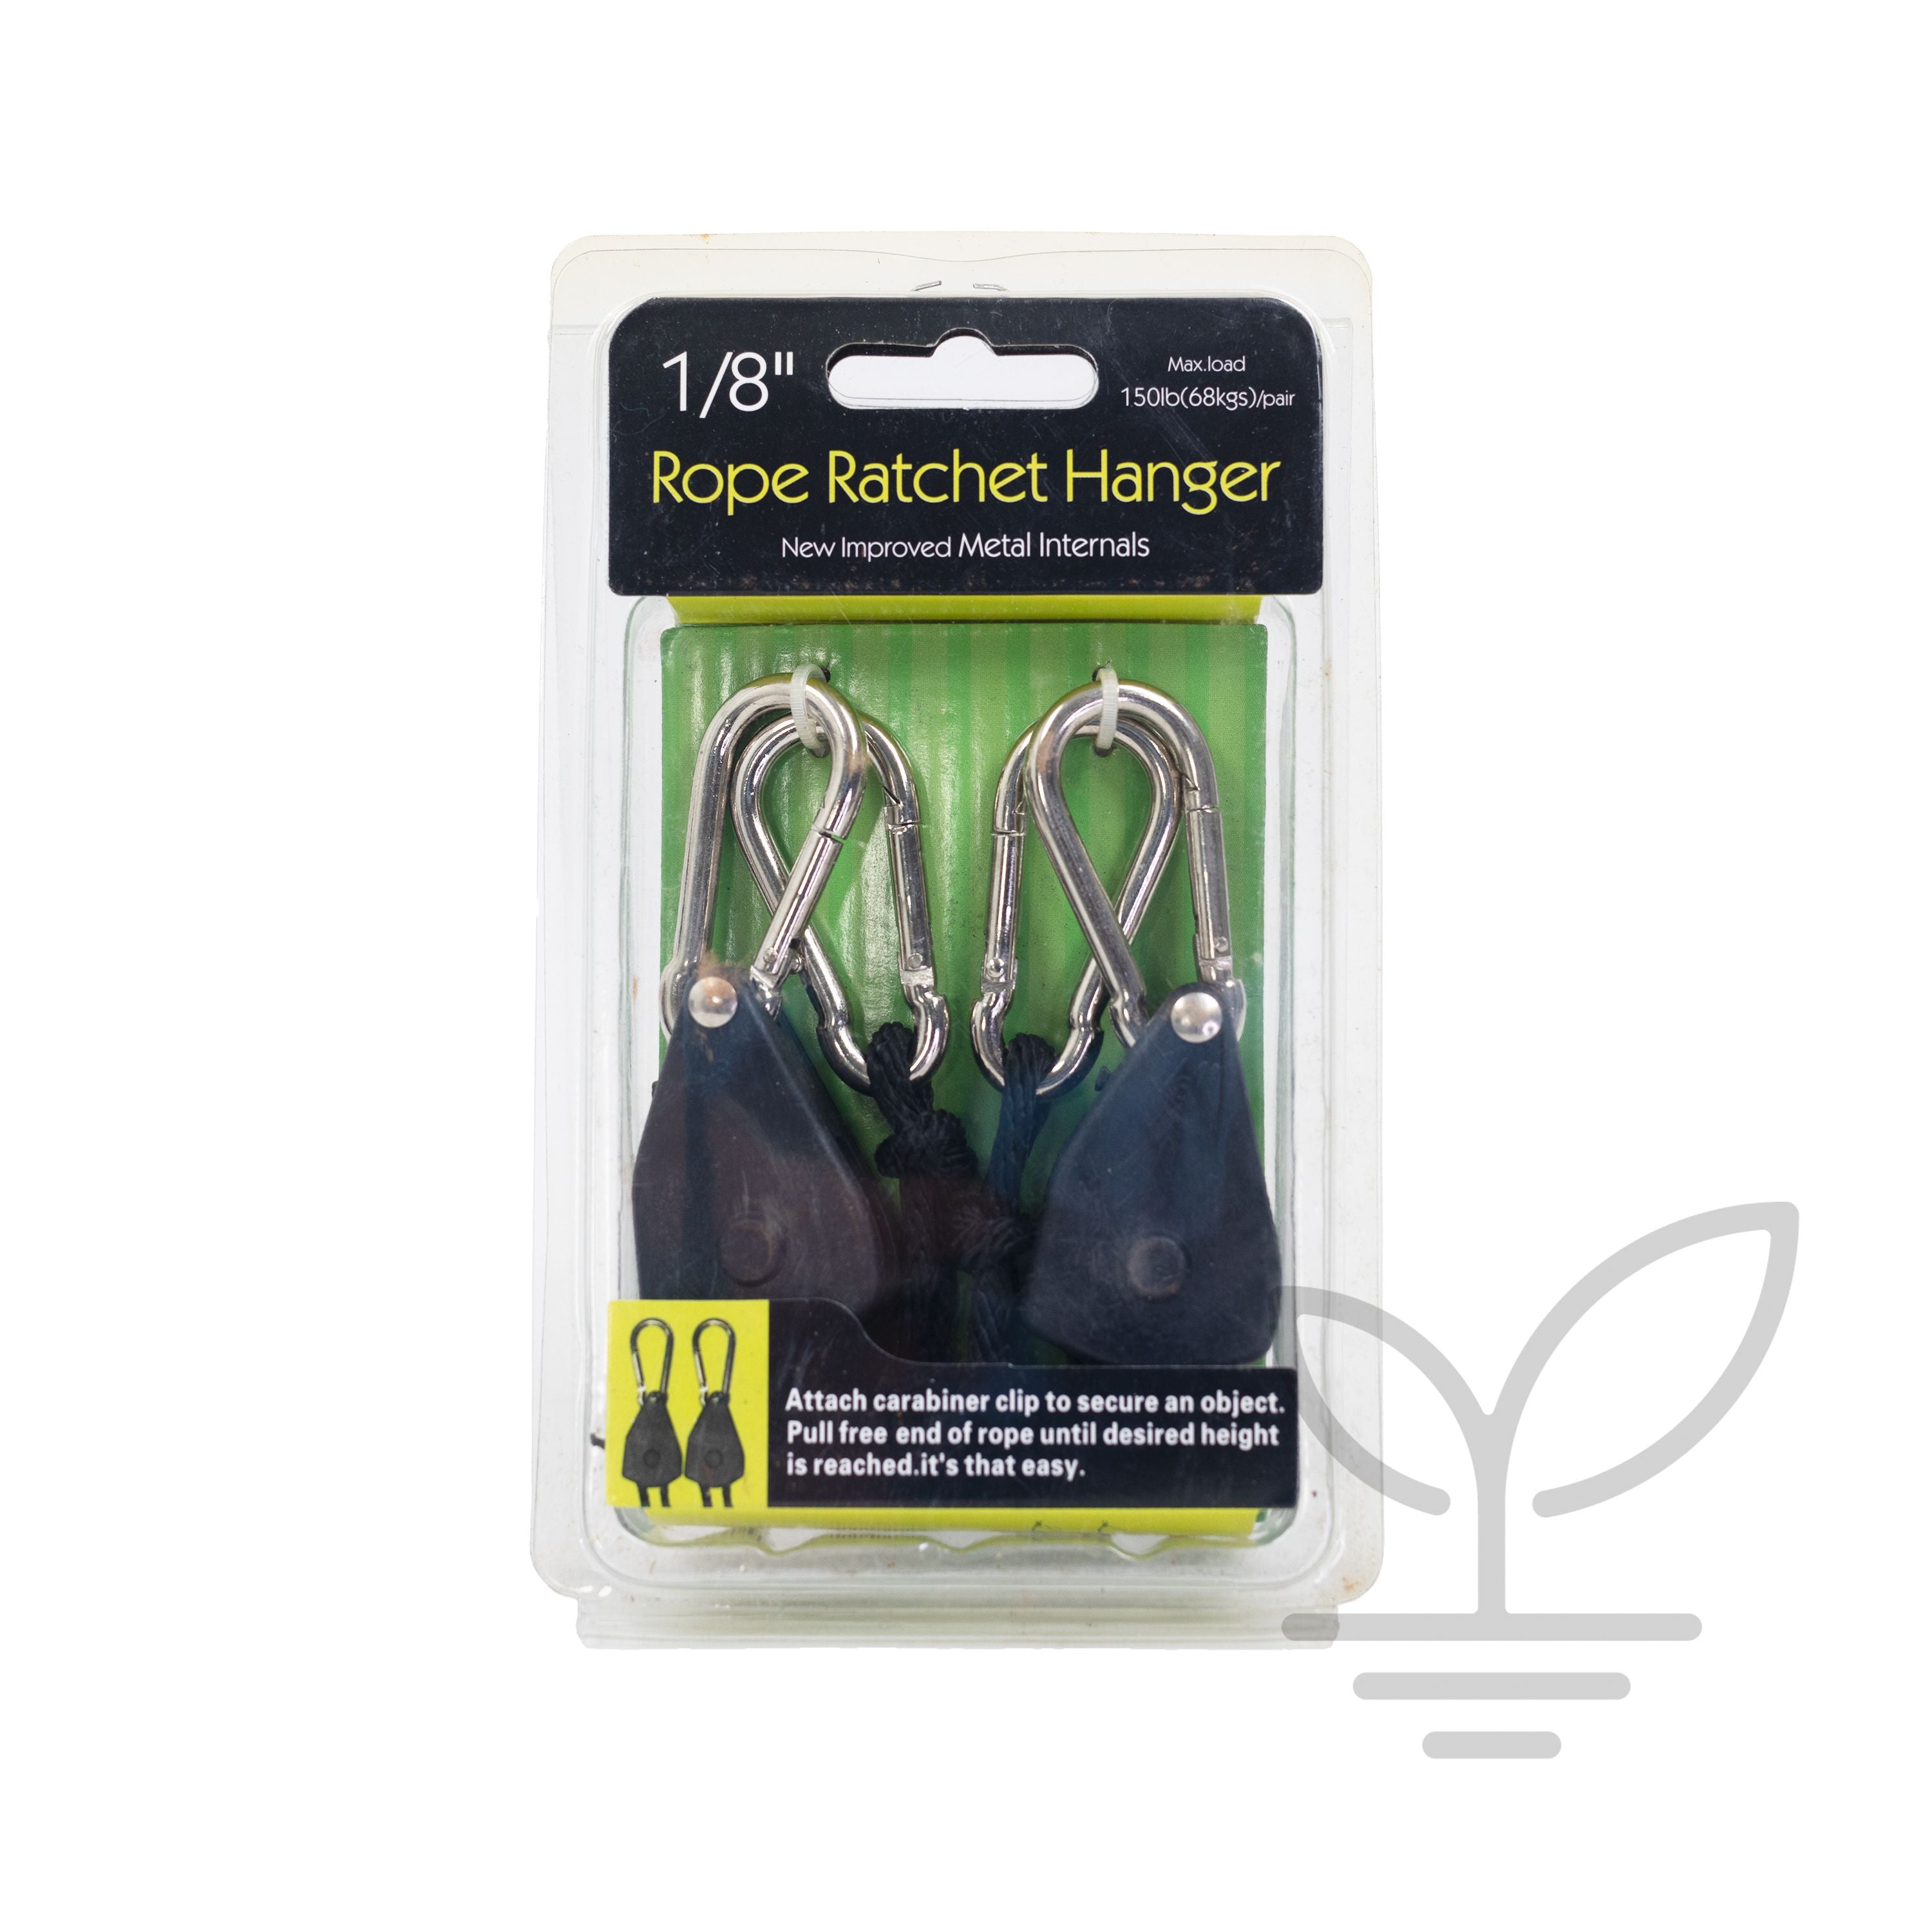 1/8" Rope Ratchet Hangers - 2 pack